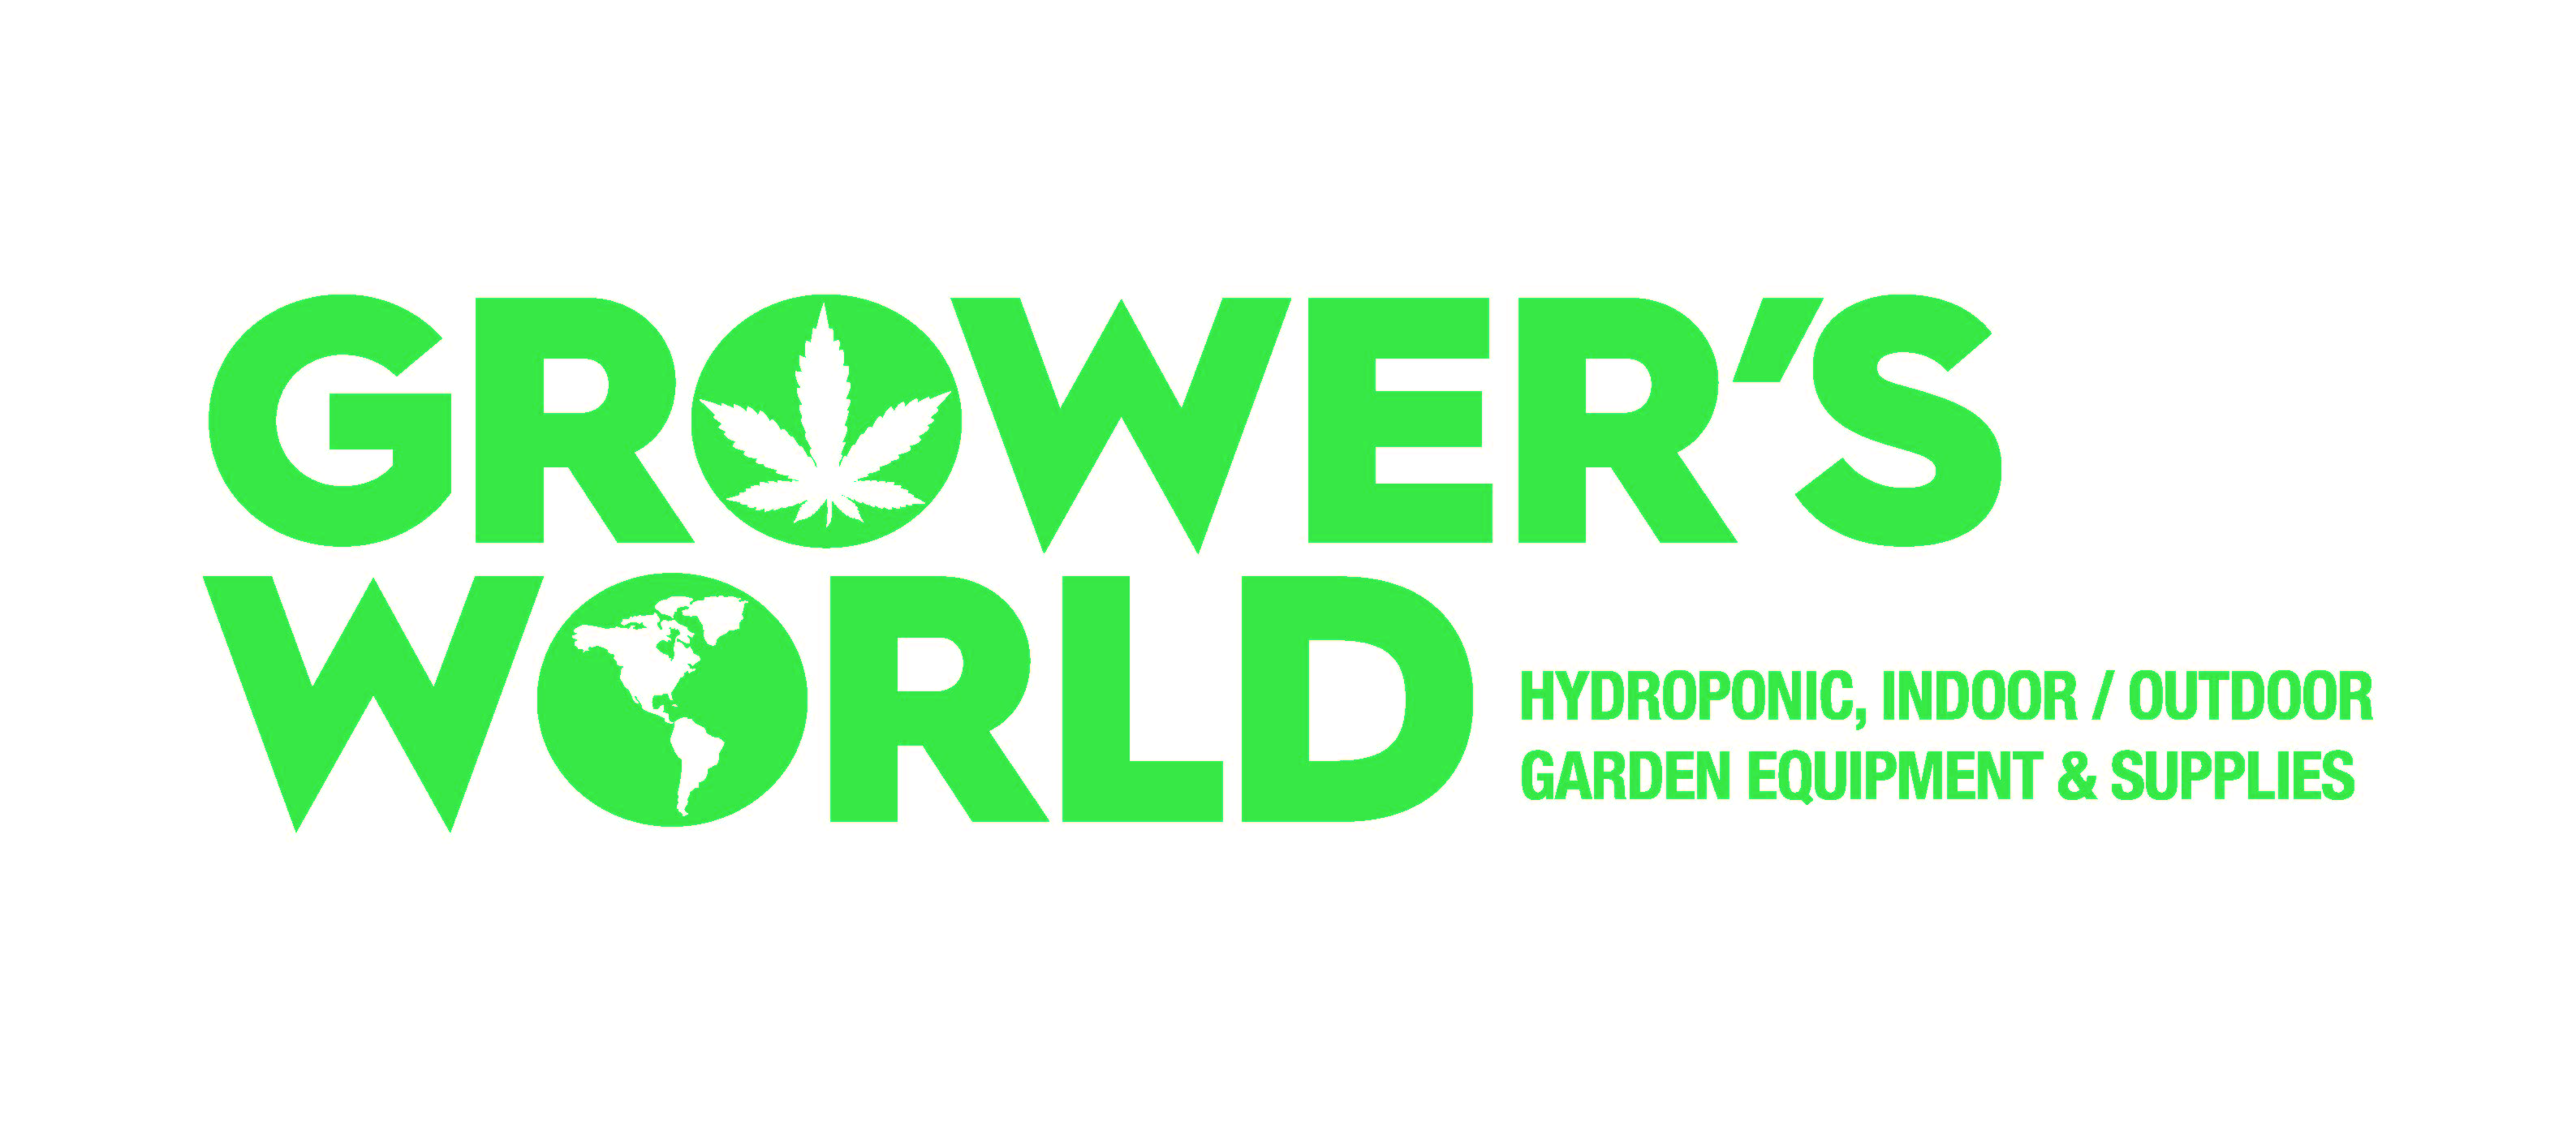 Grower's World logo